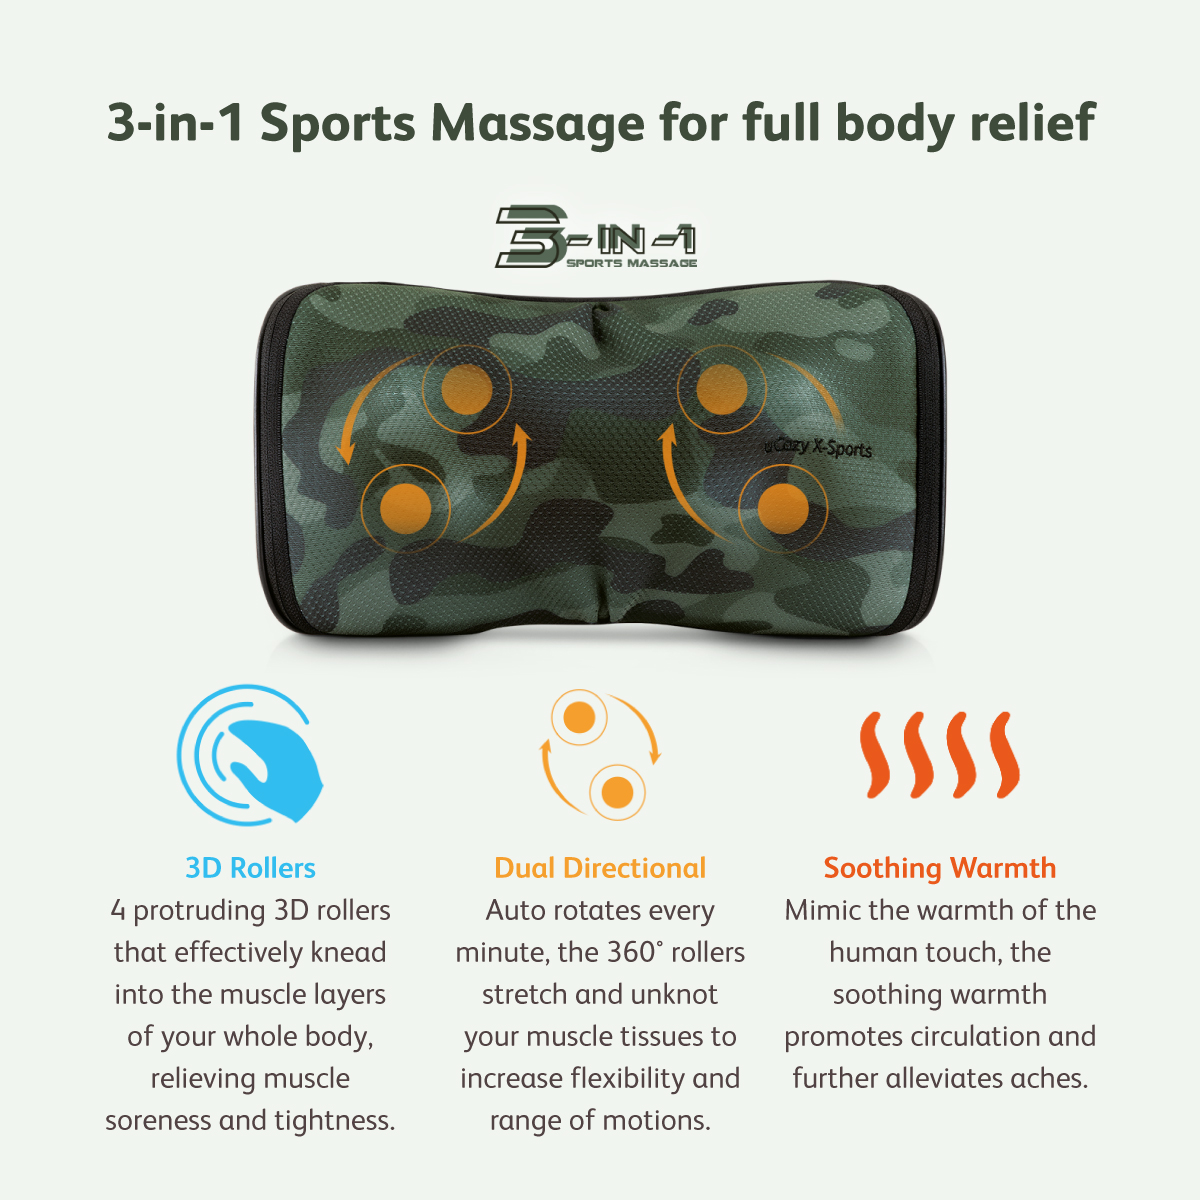 OSIM uCozy X-Sports Neck & Shoulders Massager